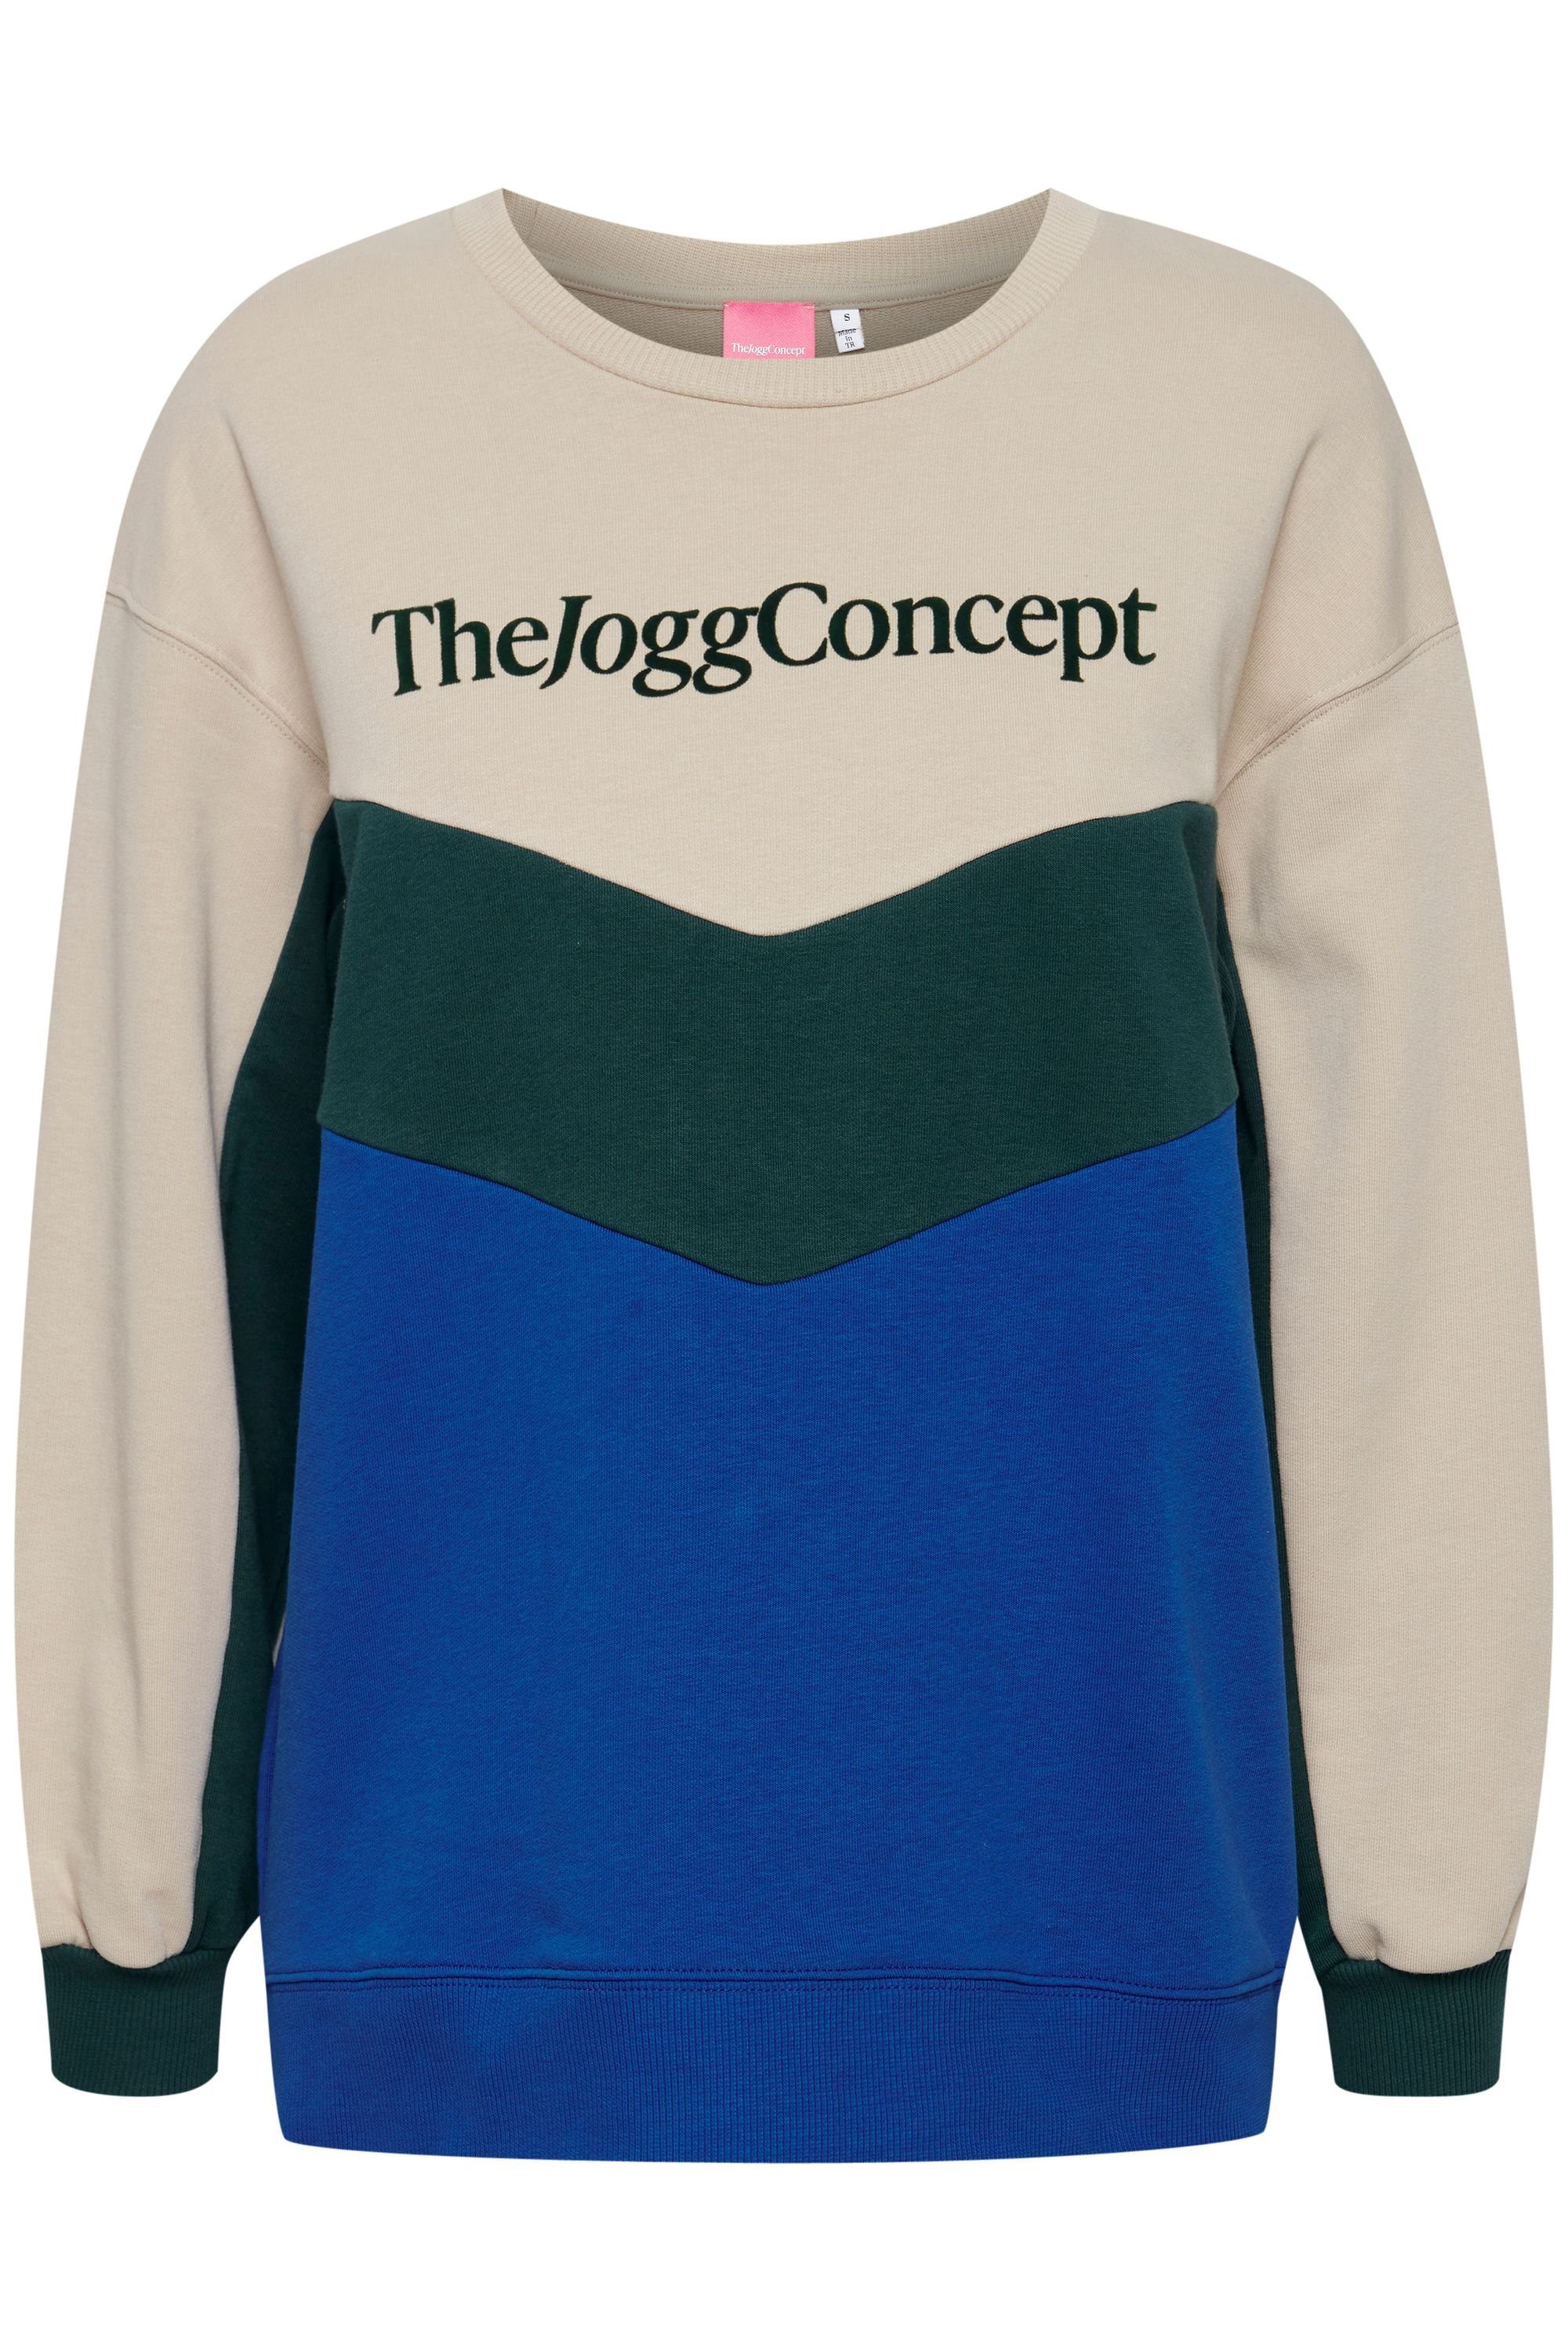 SWEATSHIRT Blue JCSAFINE CUT Mix - Sweatshirt Princess (201440) 22800112 TheJoggConcept.